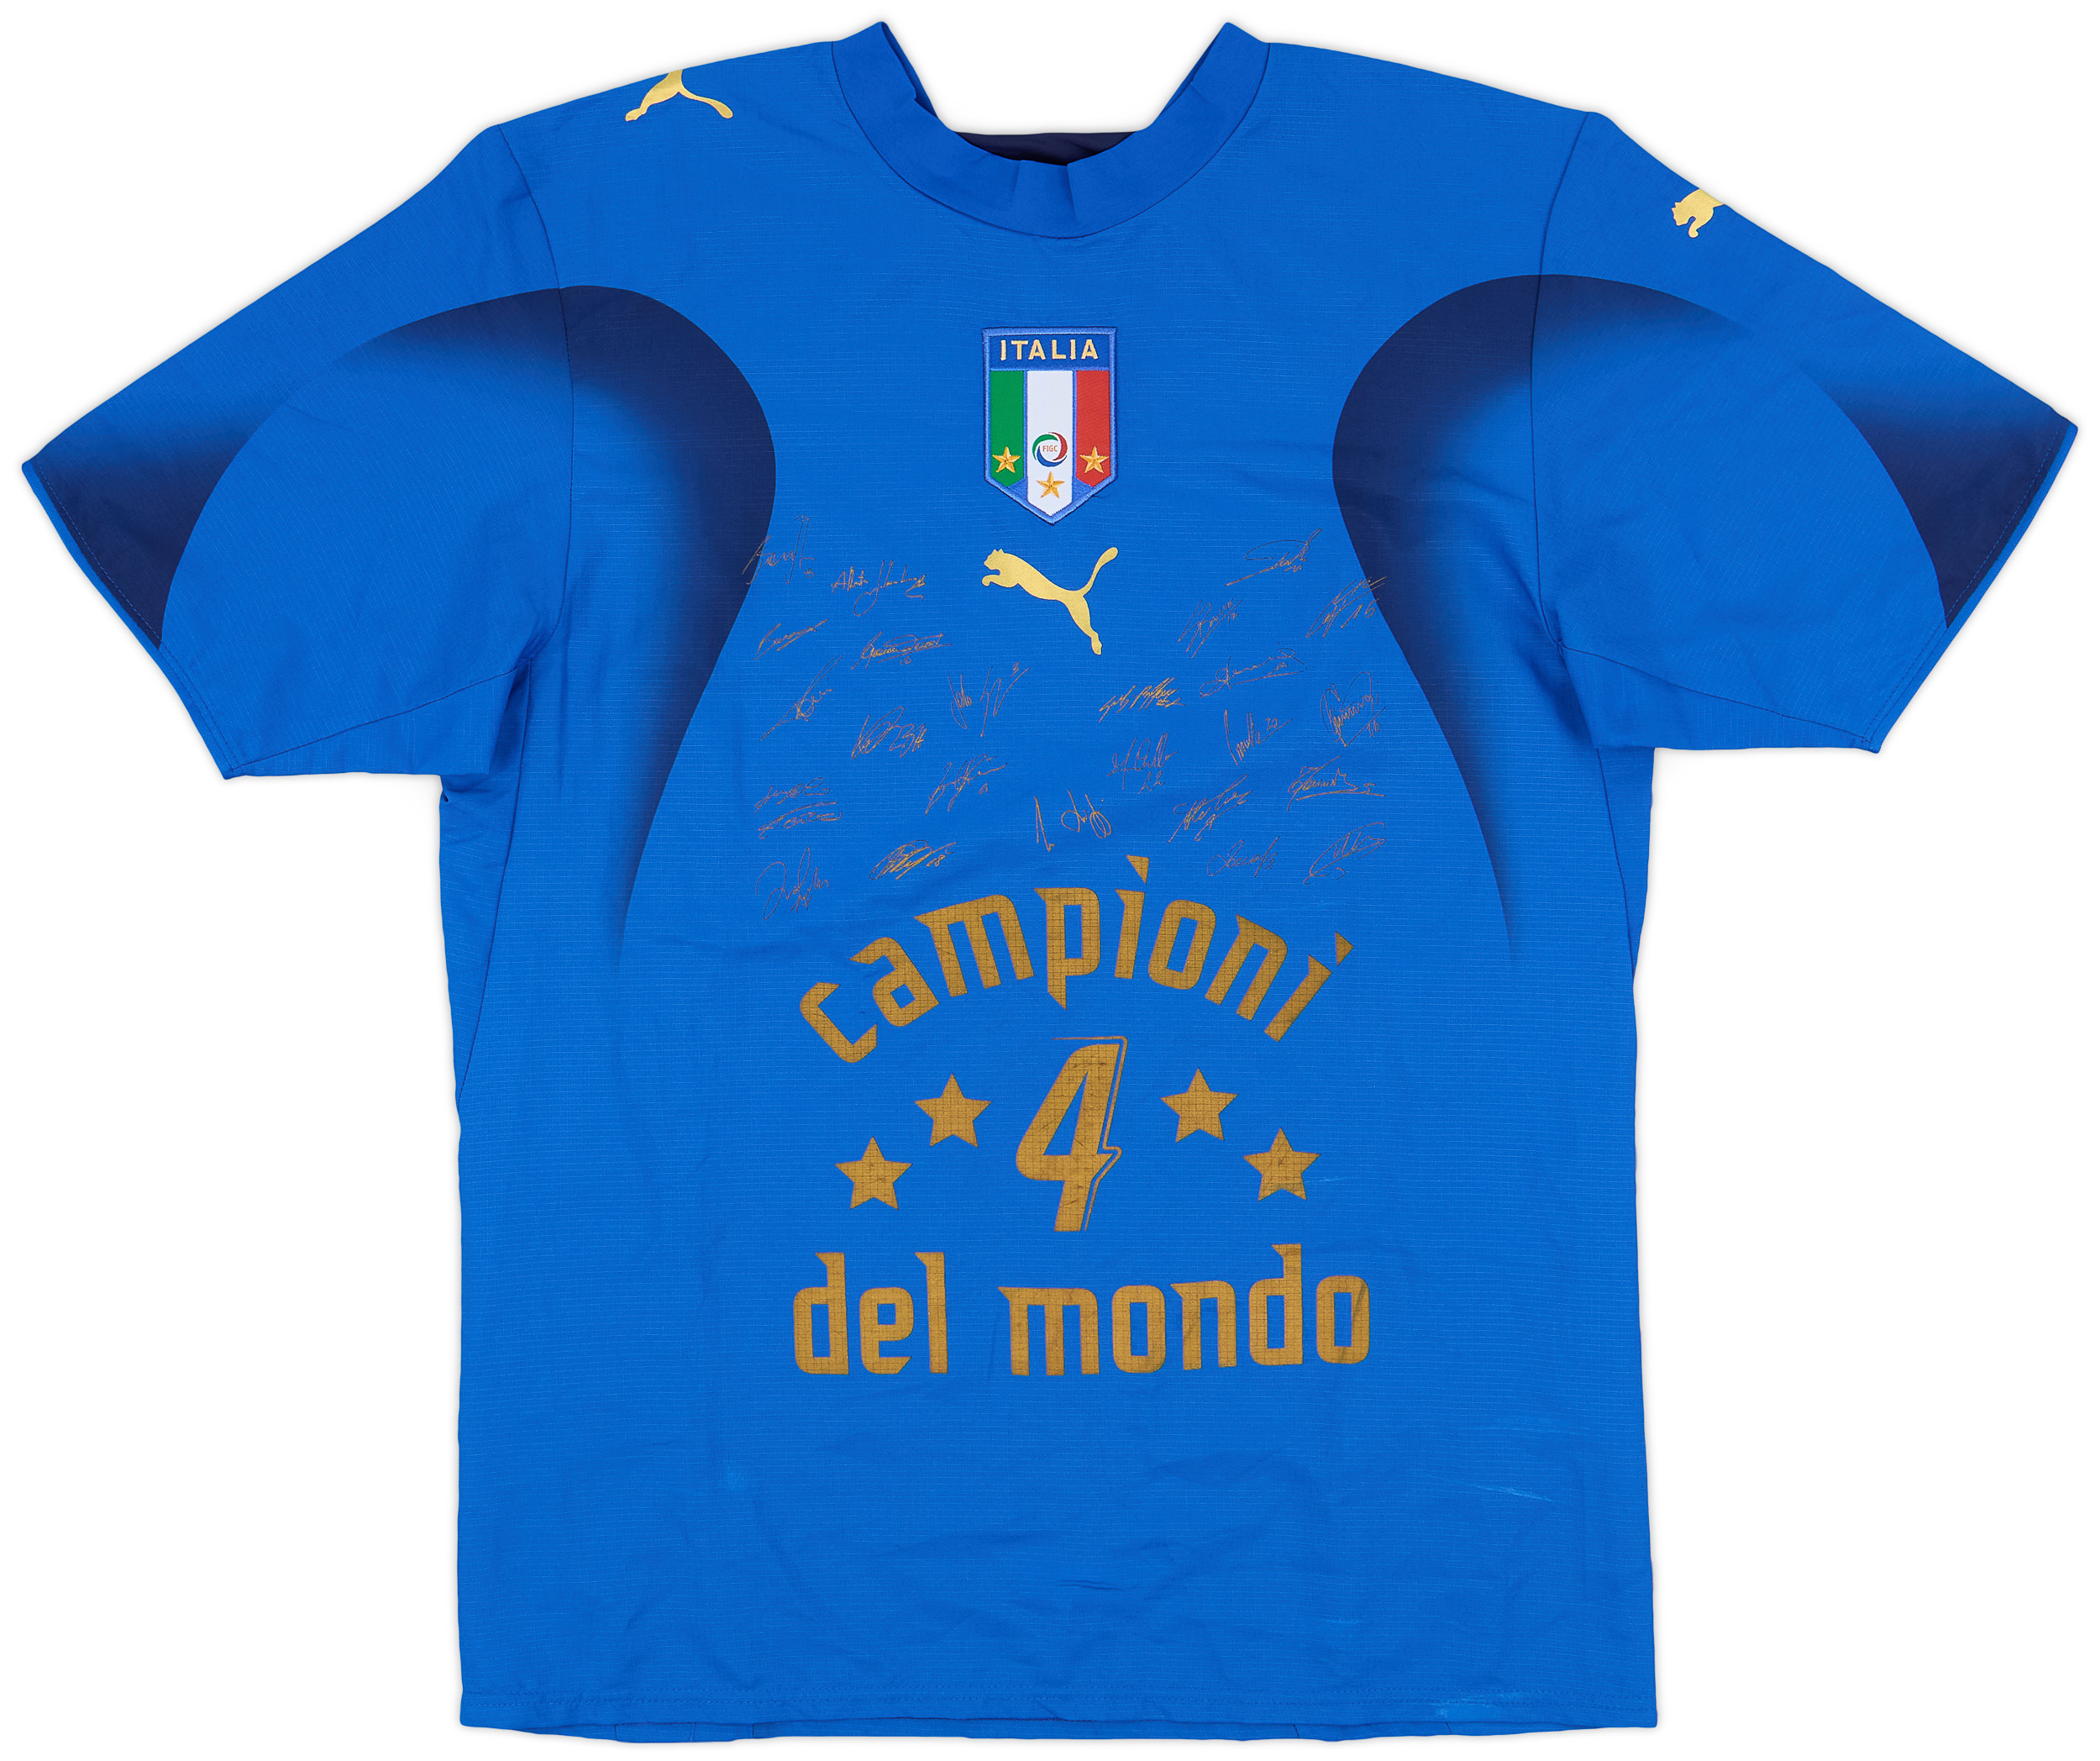 2006 Italy 'Campioni Del Mondo' 'Signed' Home Shirt - 9/10 - ()